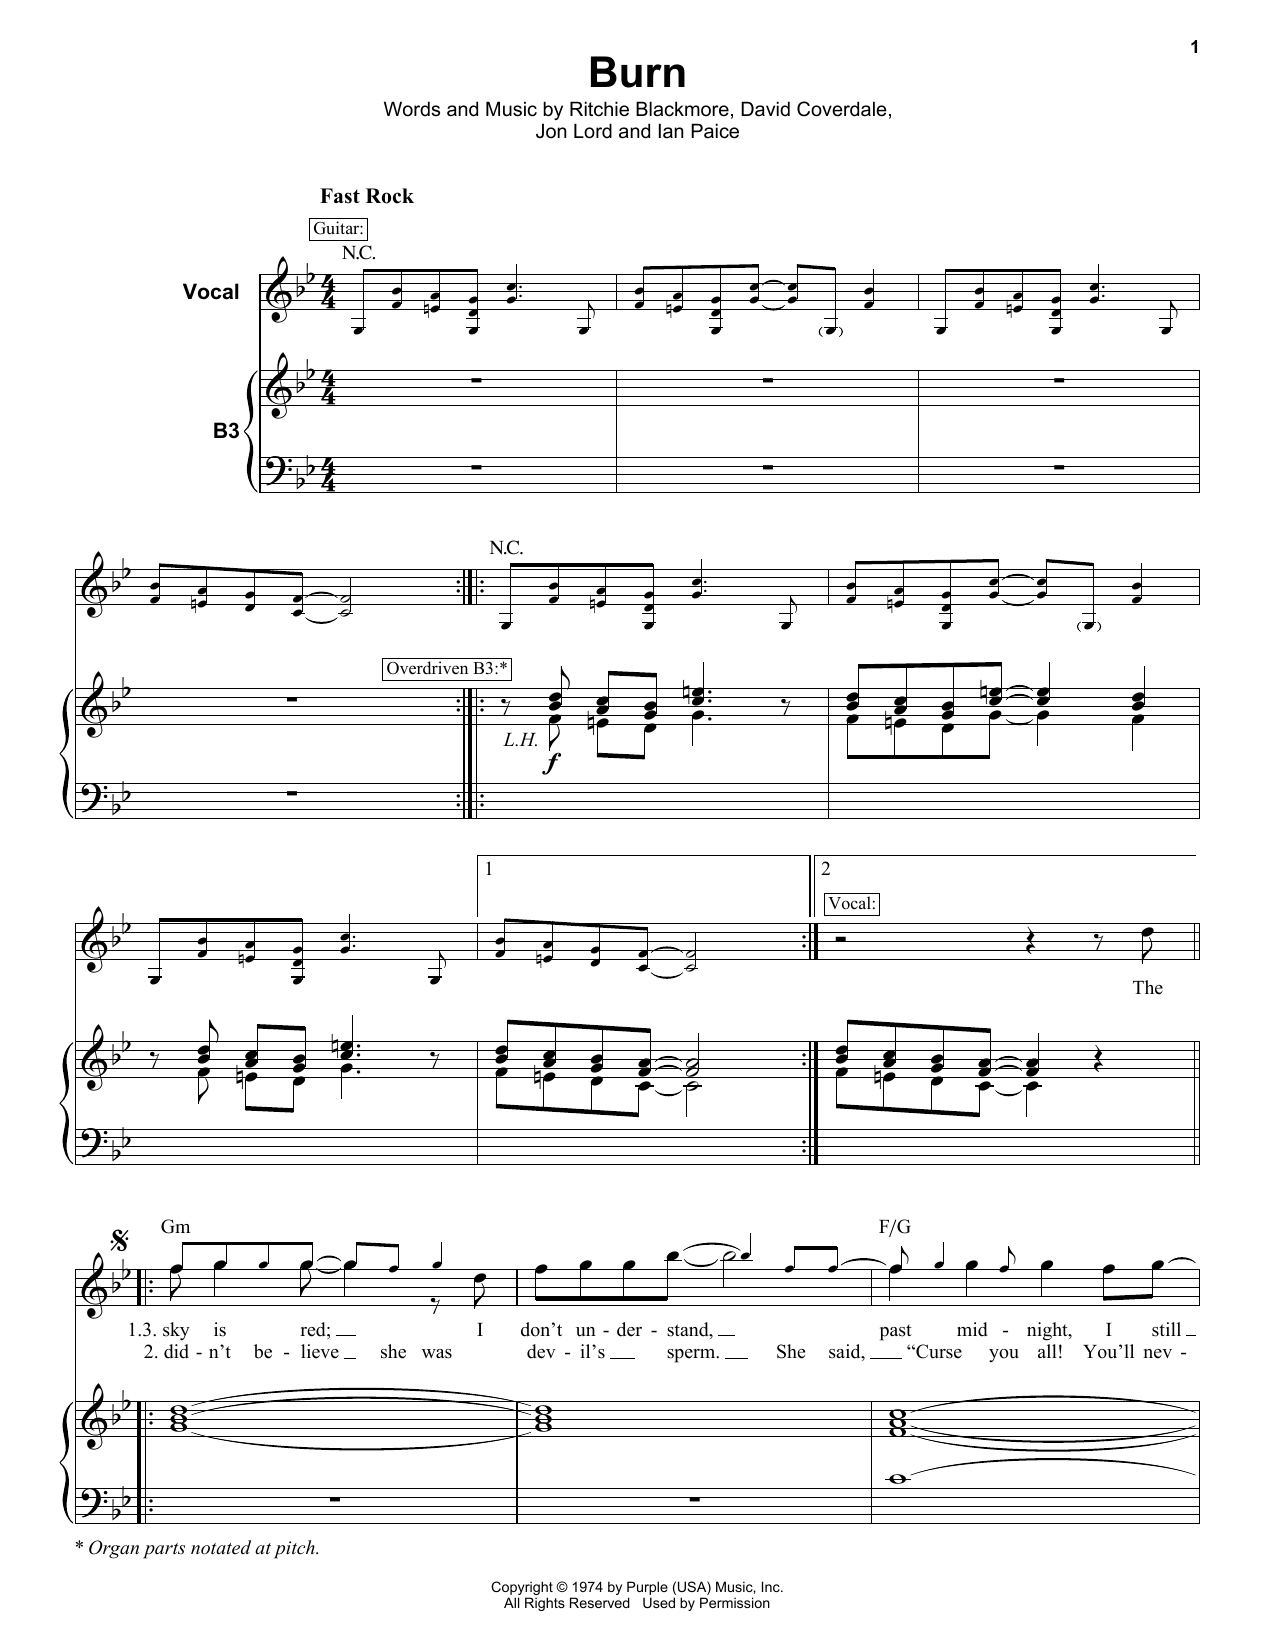 Deep Purple Burn Sheet Music Notes & Chords for Keyboard Transcription - Download or Print PDF